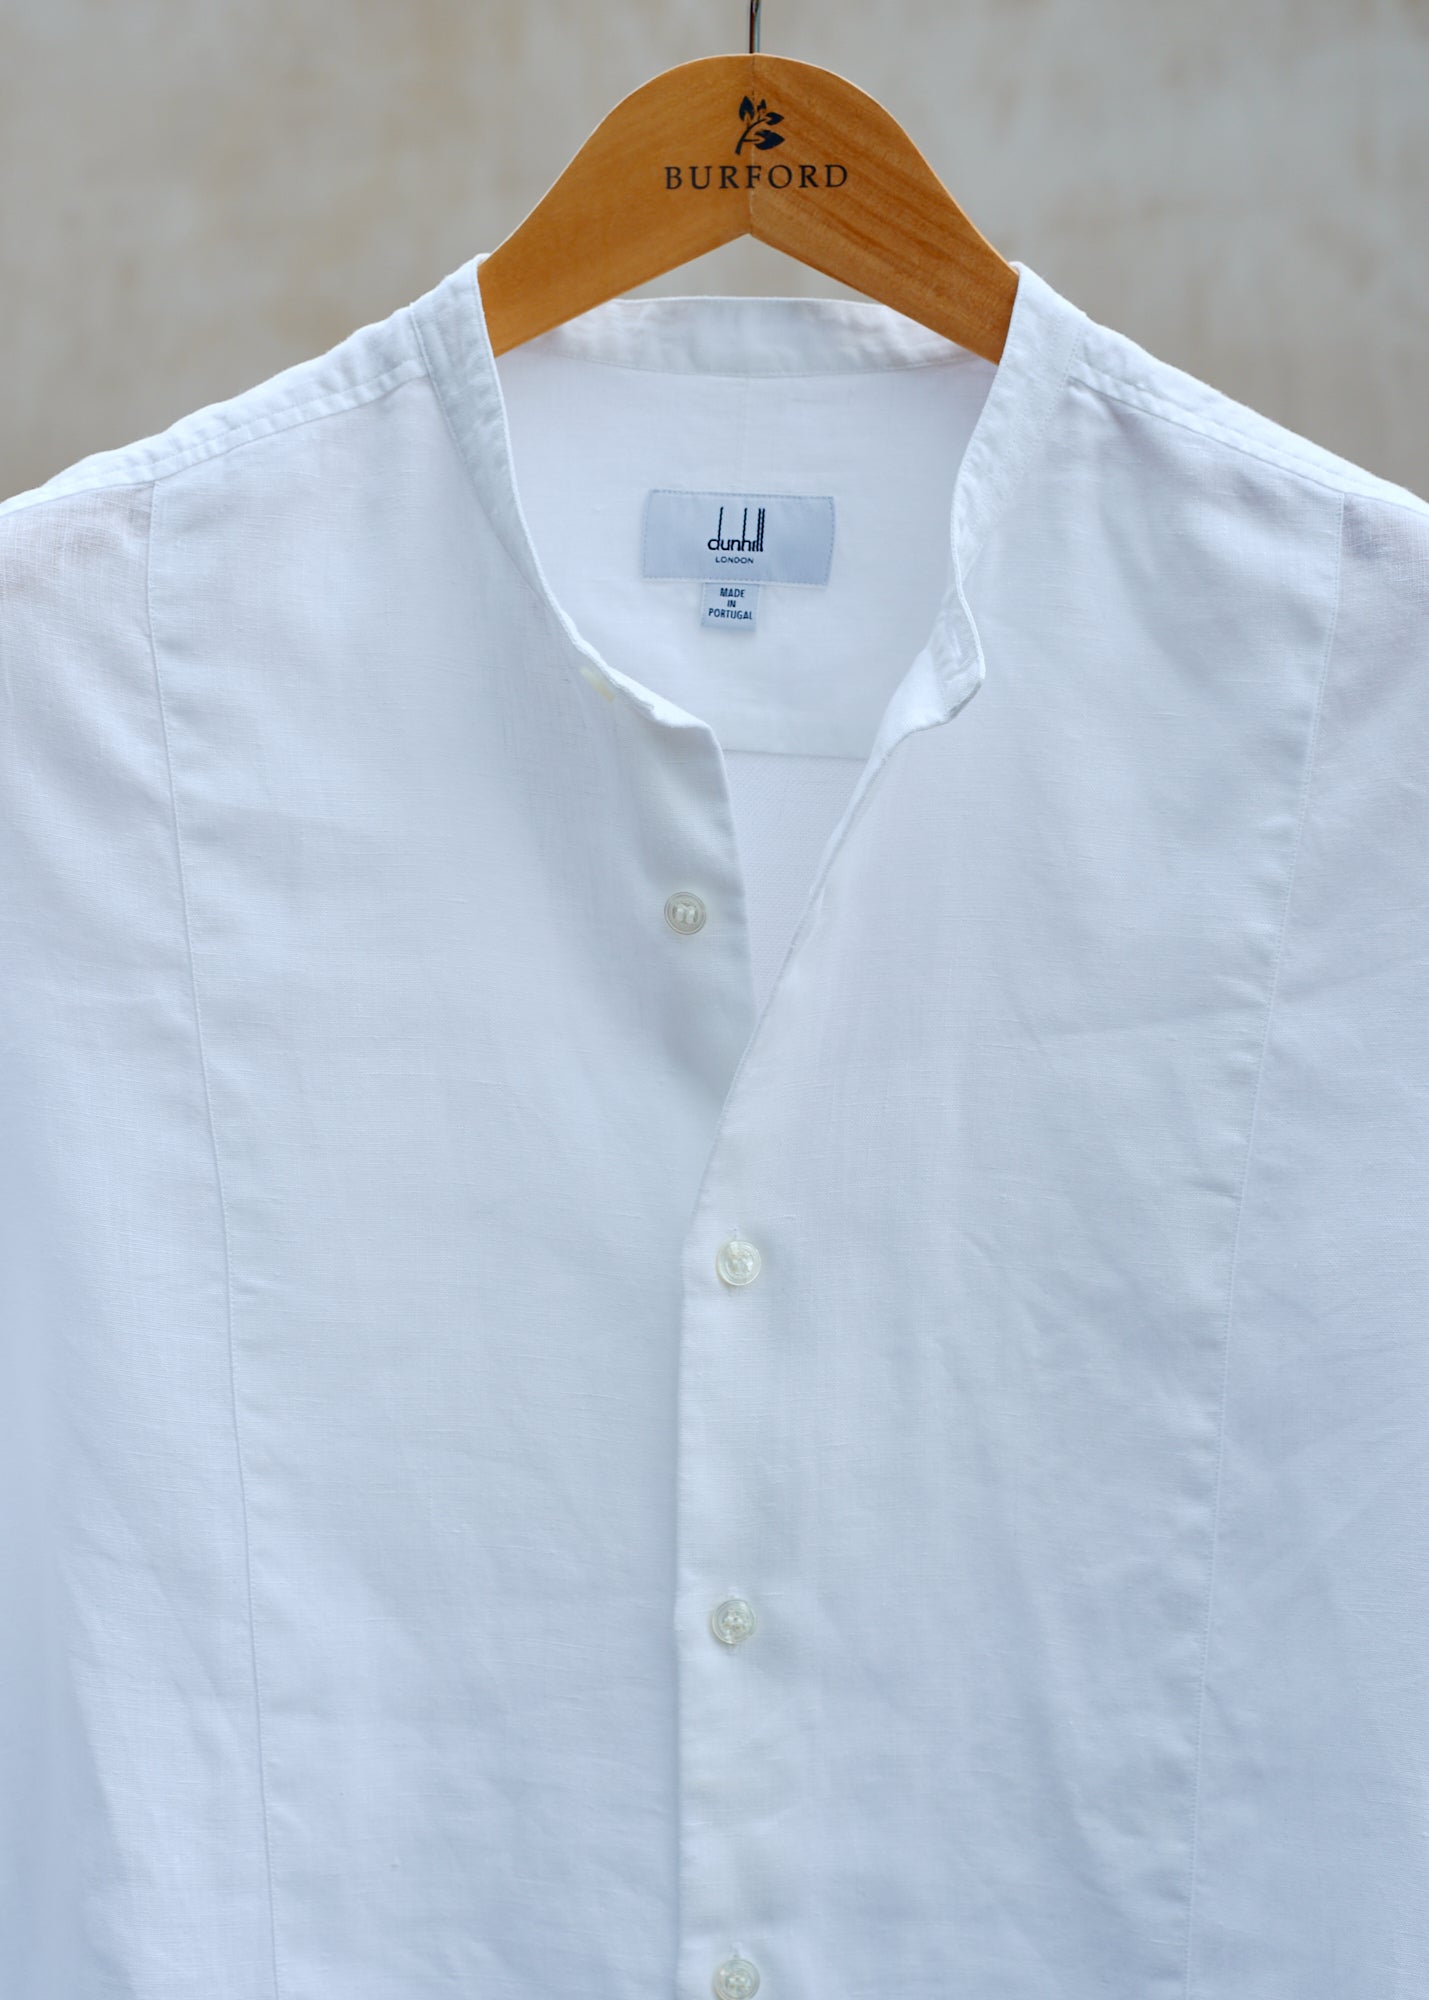 Dunhill White Linen Collarless Shirt W Pique Back - S/M